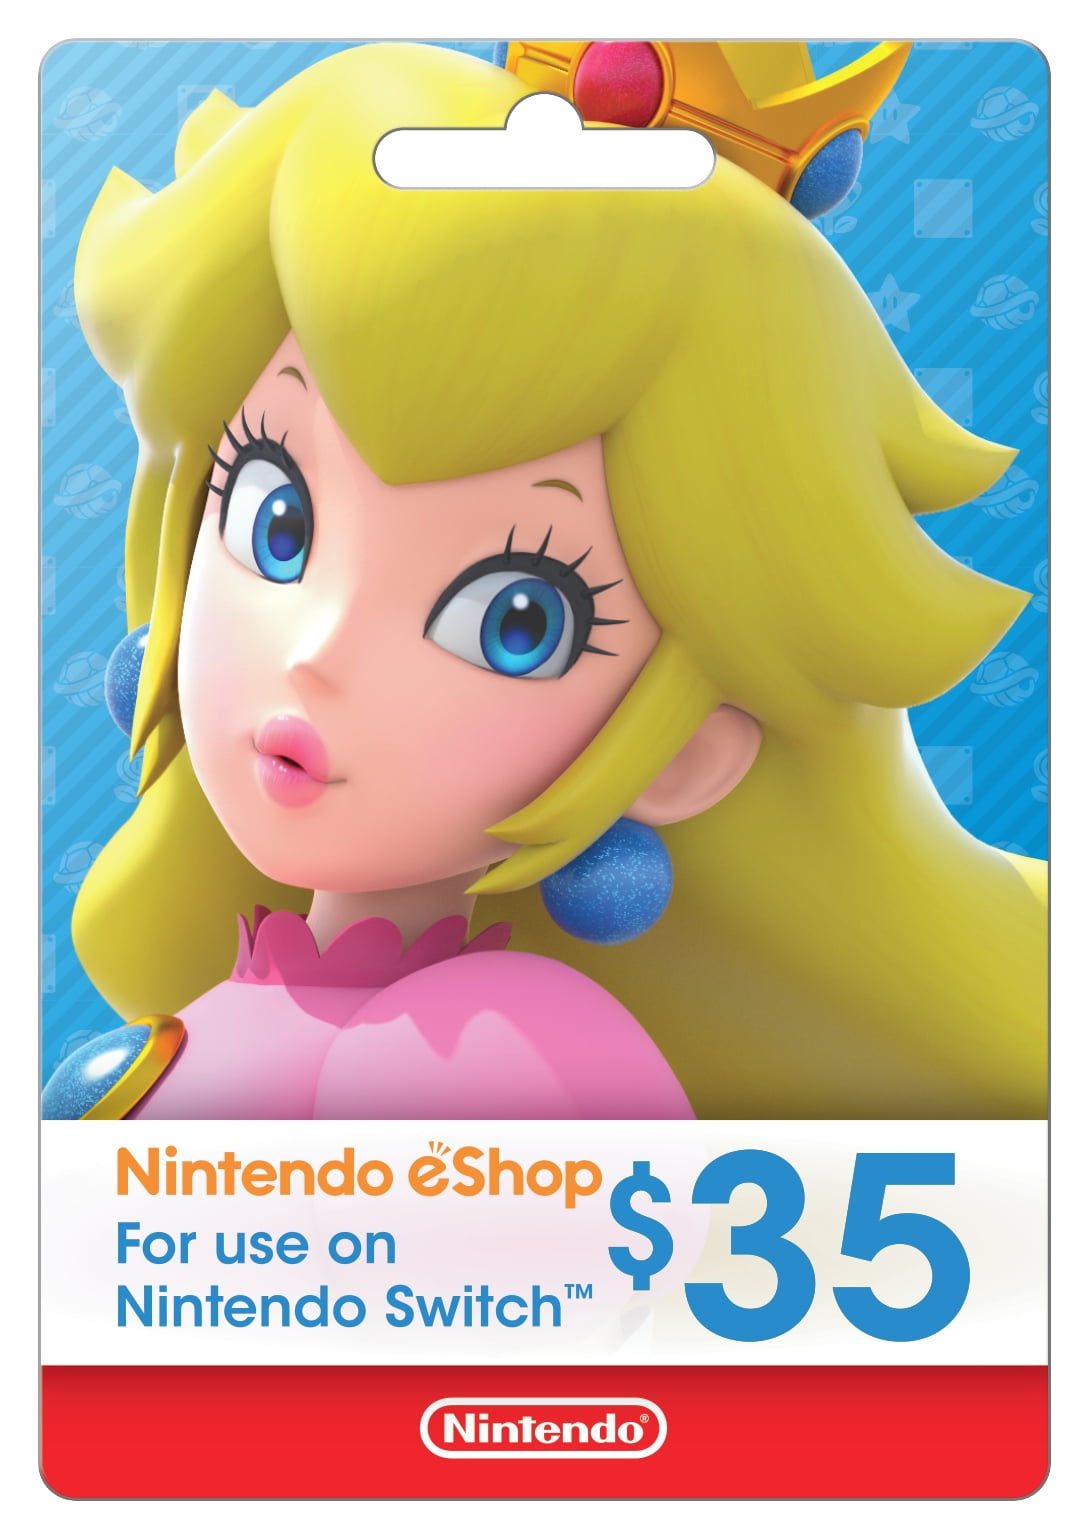 Premonition Landsdækkende essens Nintendo eShop $35.00 Physical Gift Card featuring Peach - Walmart.com